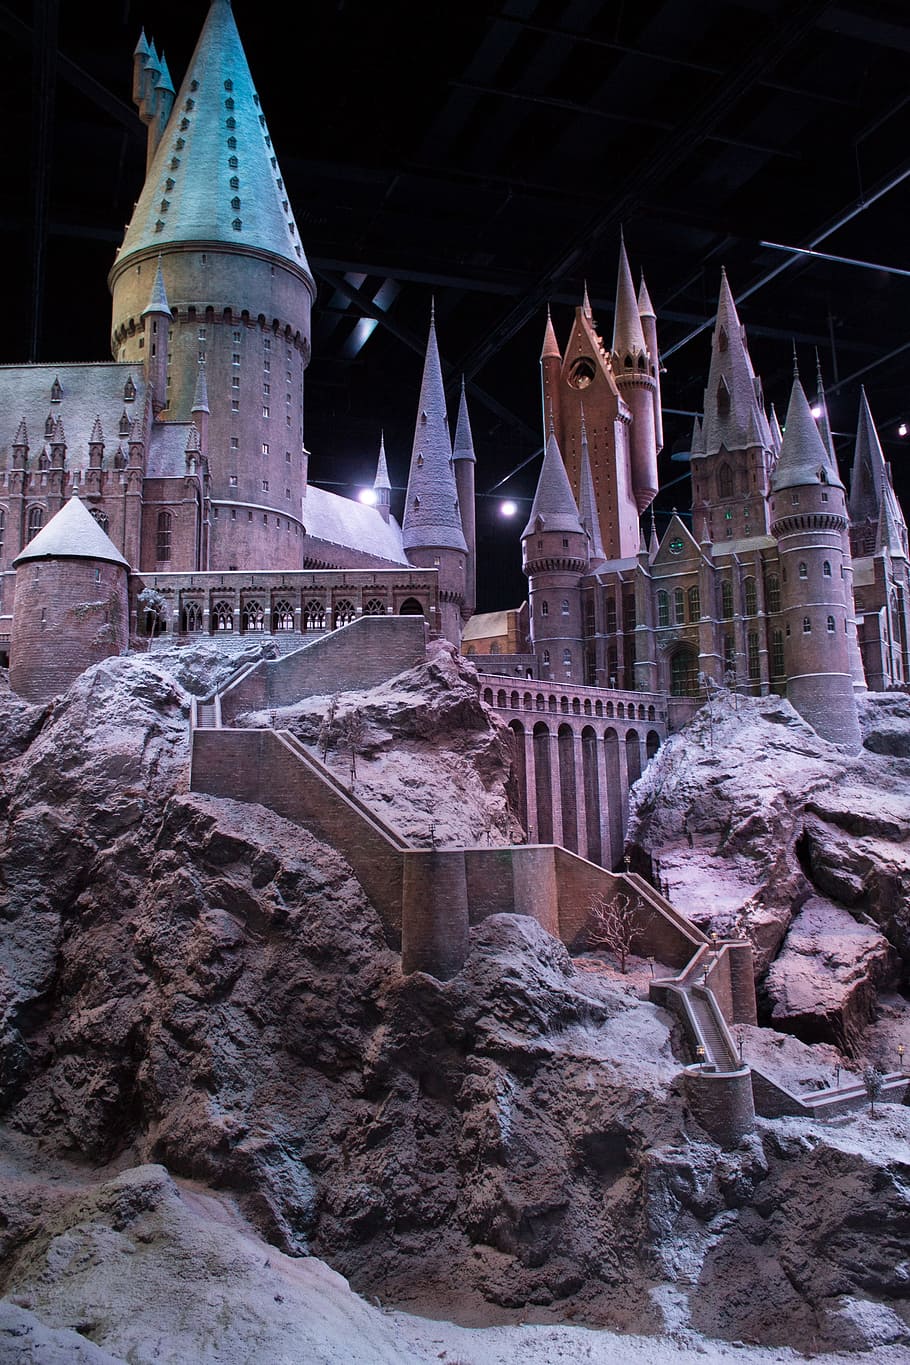 Harry Potter, Hogwarts, Studio, London, architecture, night